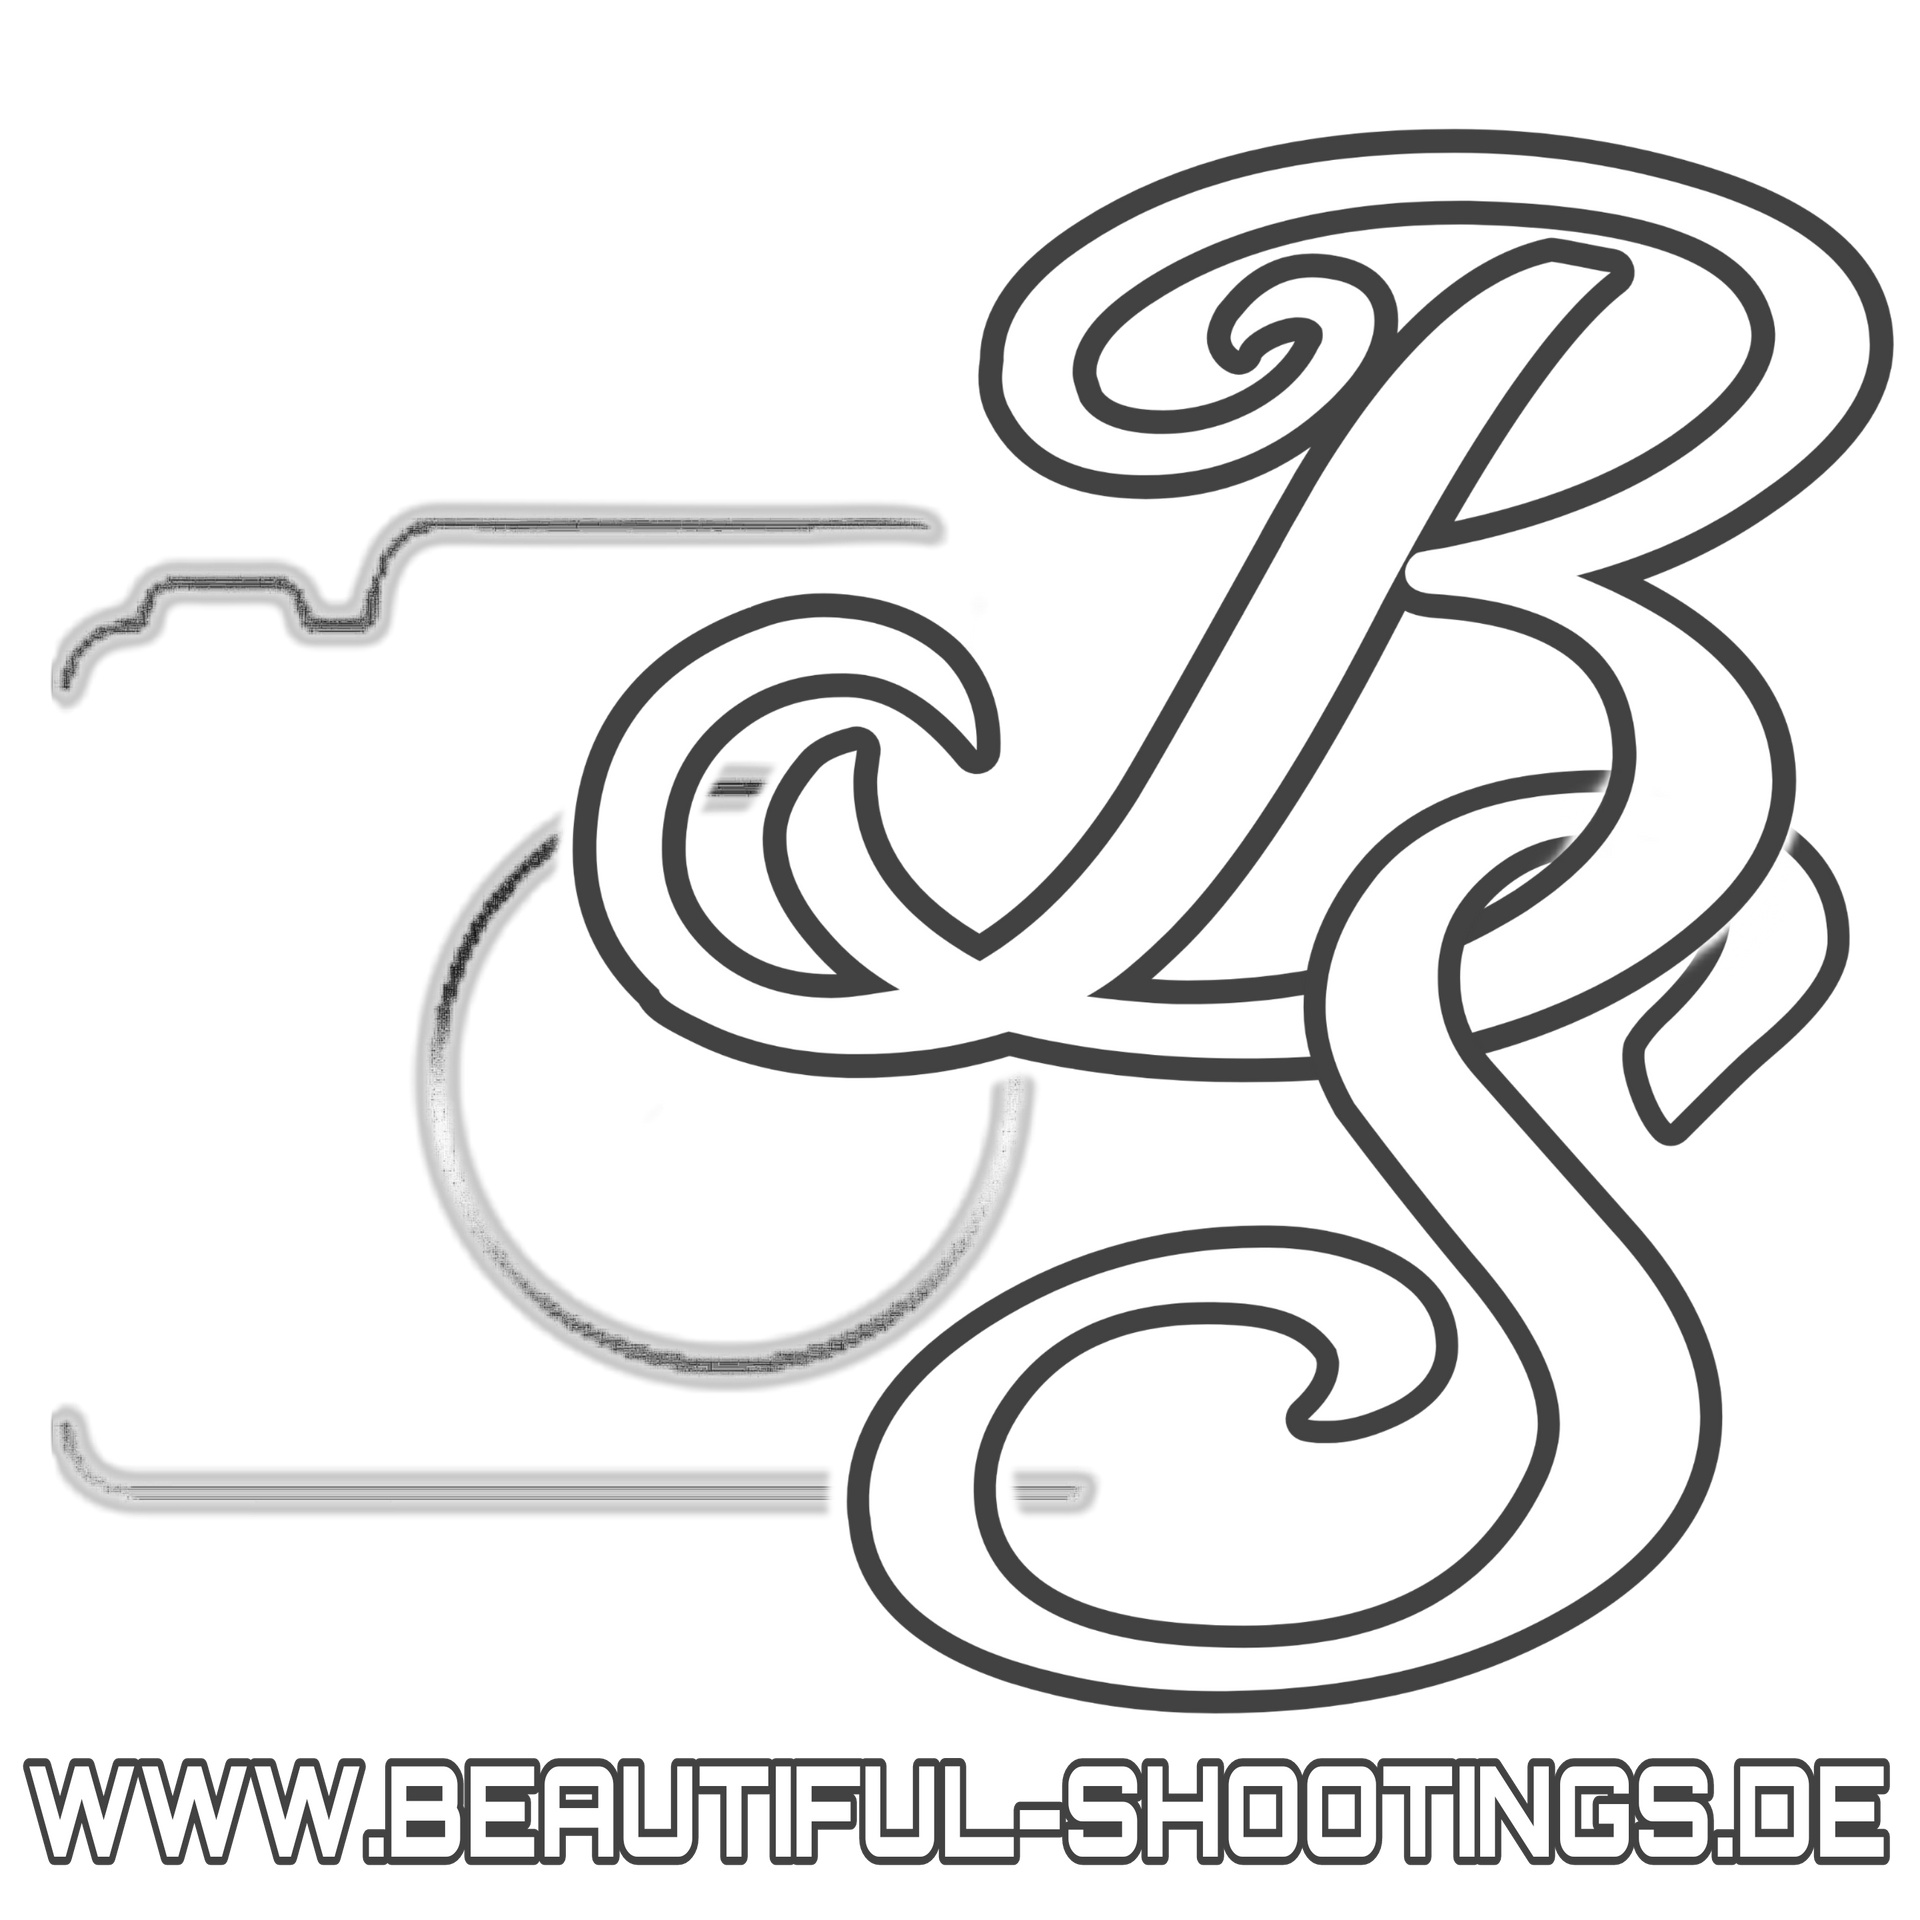 Willkommen | Beautiful-Shootings.de